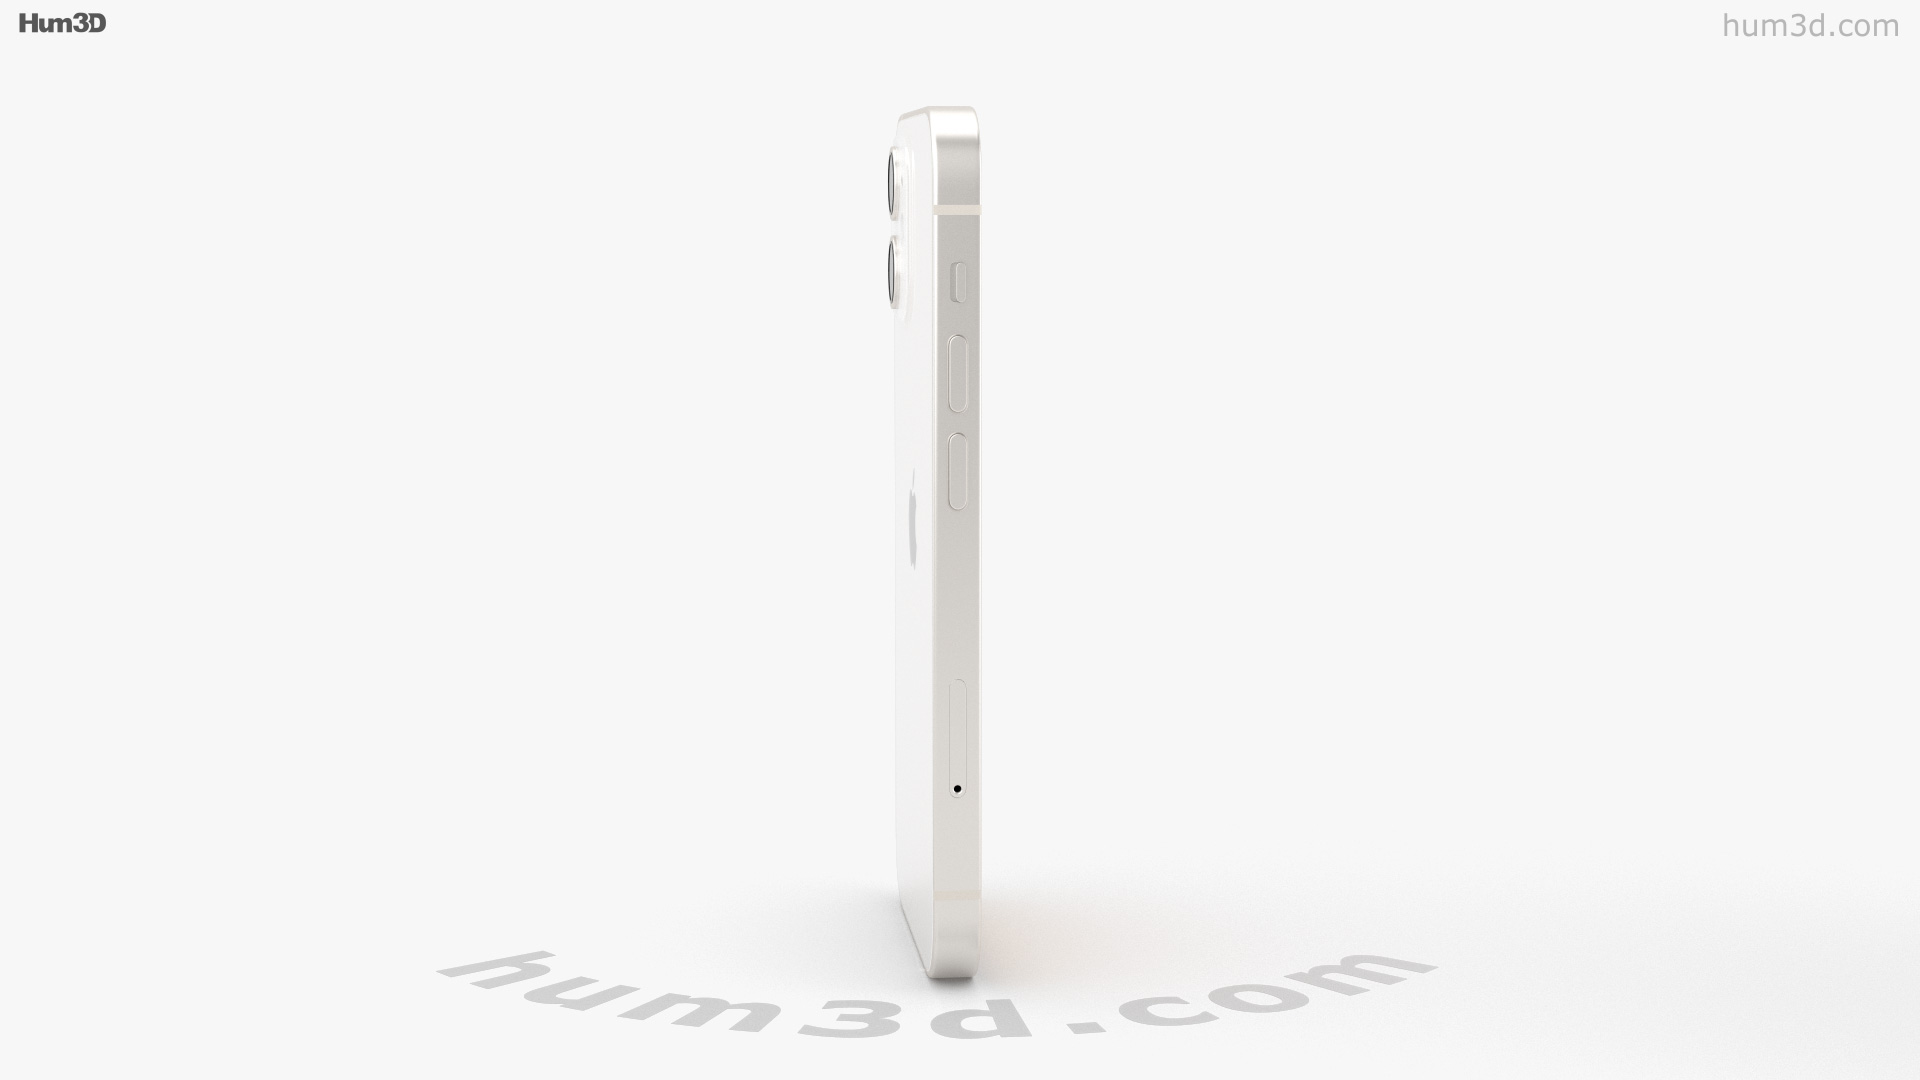 Vista 360 del modelo 3D de Apple iPhone 12 Blanco - Tienda 3DModels